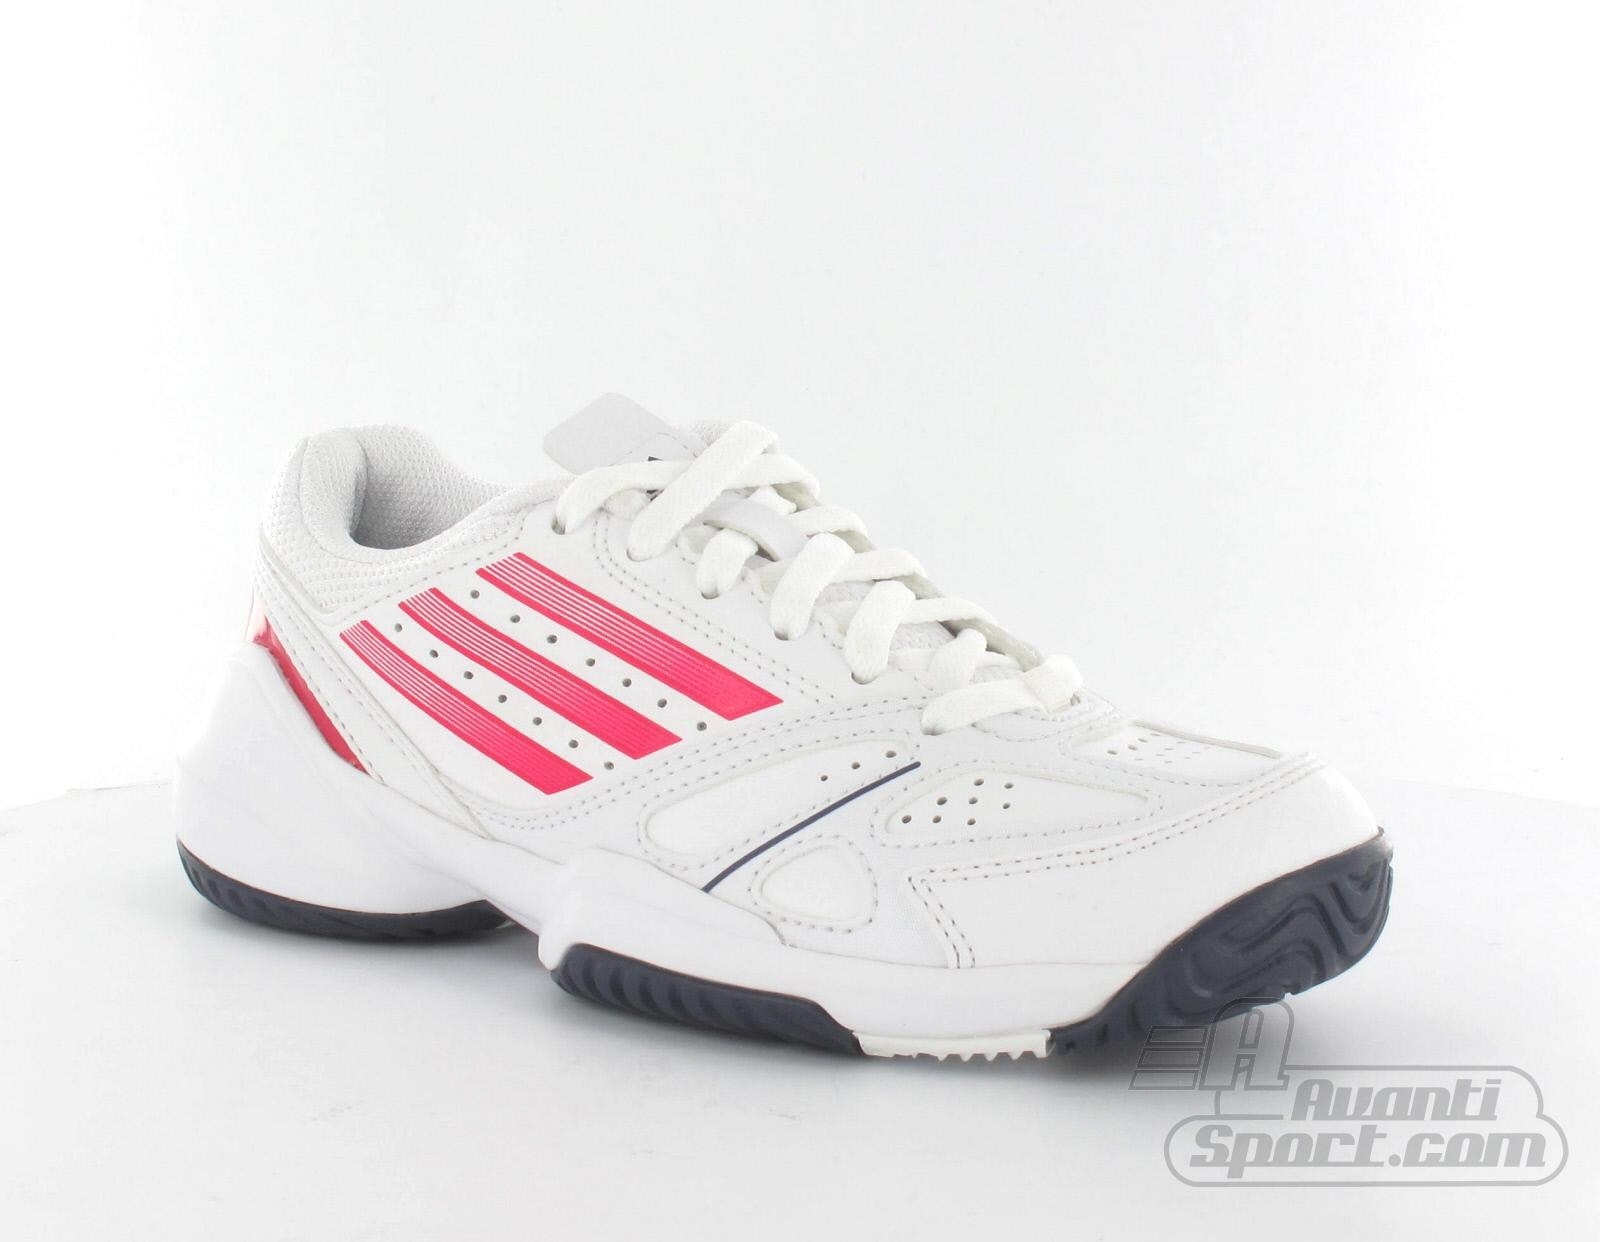 Avantisport - Adidas - Galaxy Elite Ii Kids - Tennis Kinderschoen